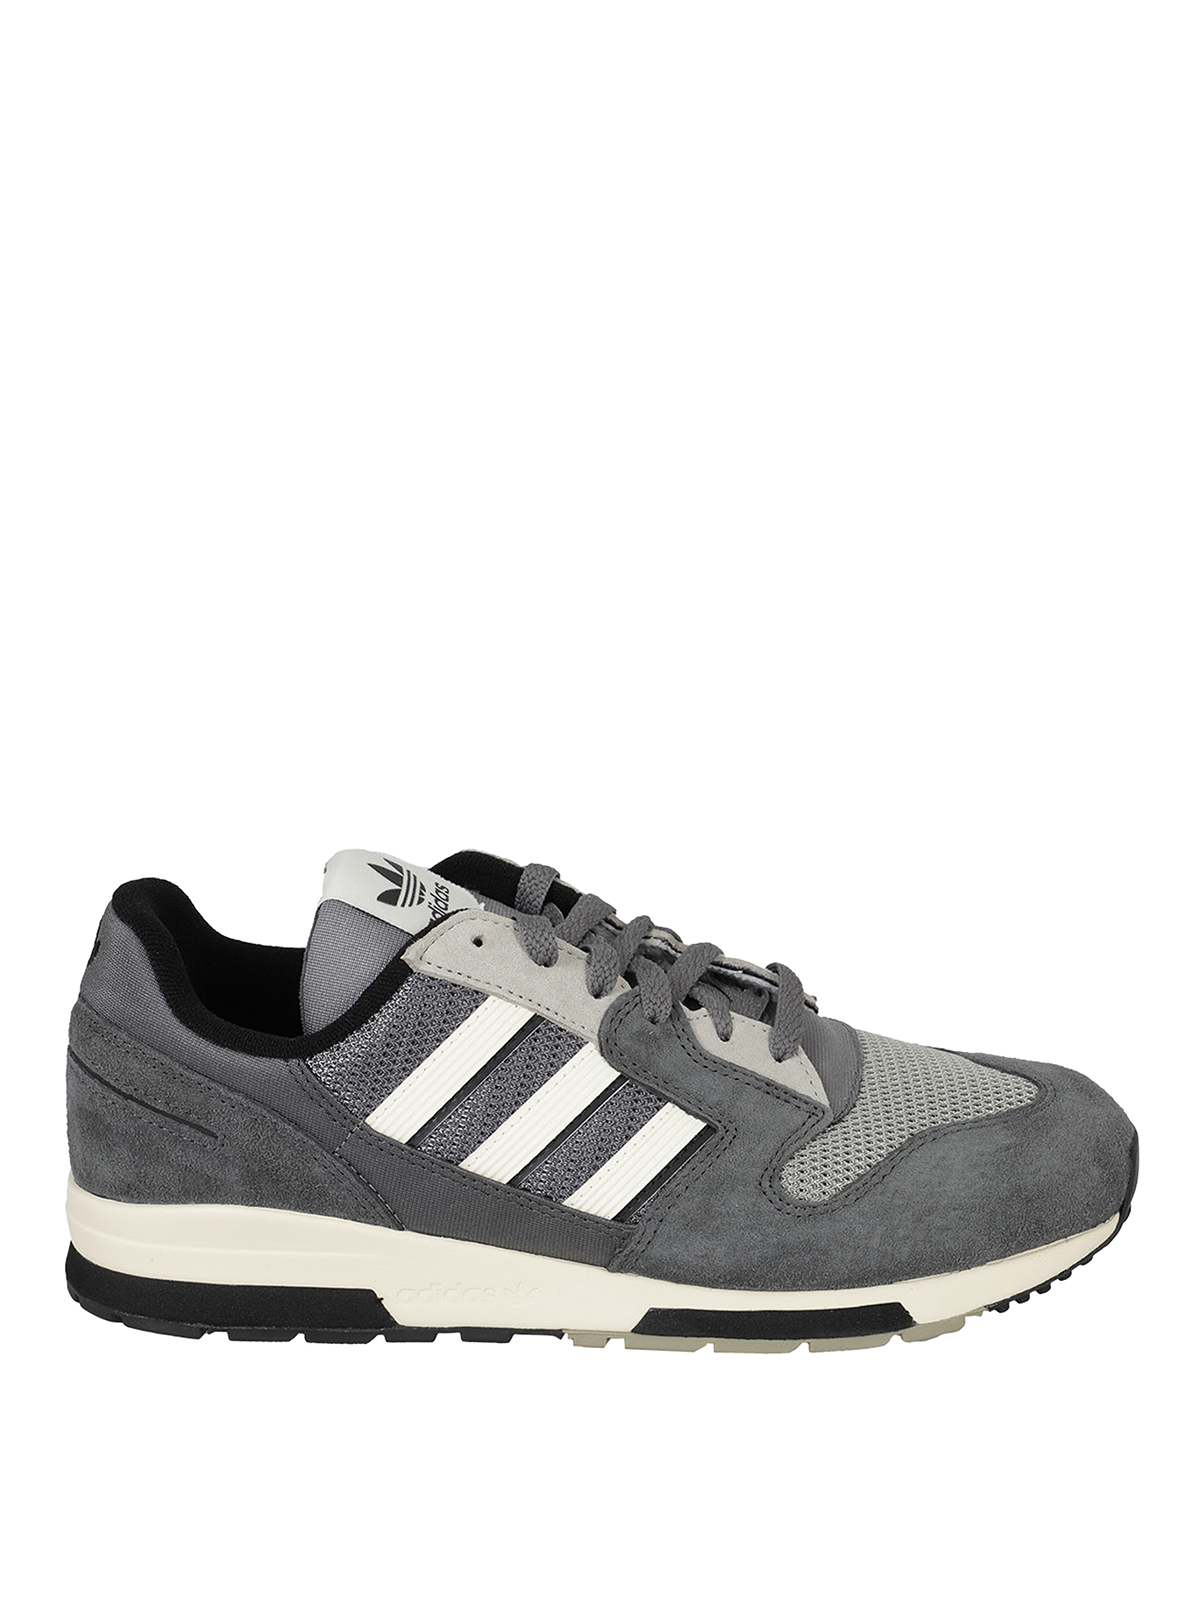 Trainers Adidas Originals - Zx 420 sneakers - FY3661